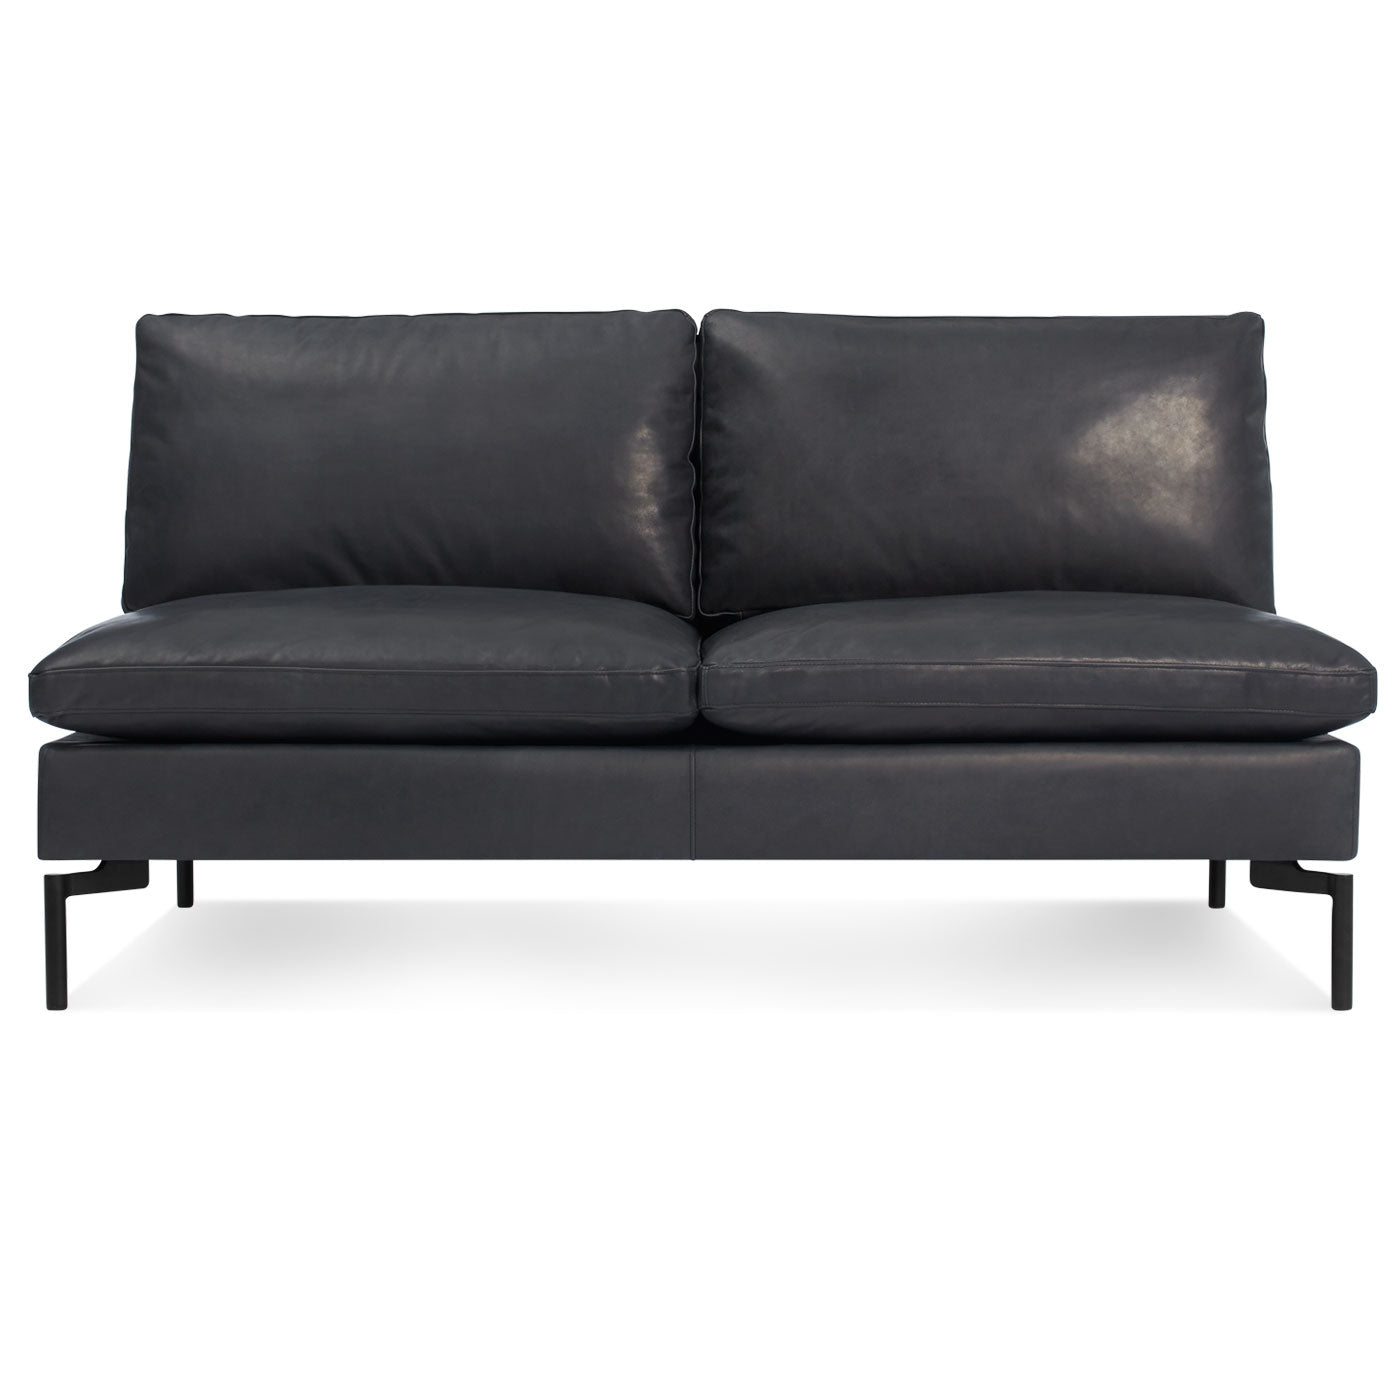 New Standard 60" Leather Armless Sofa